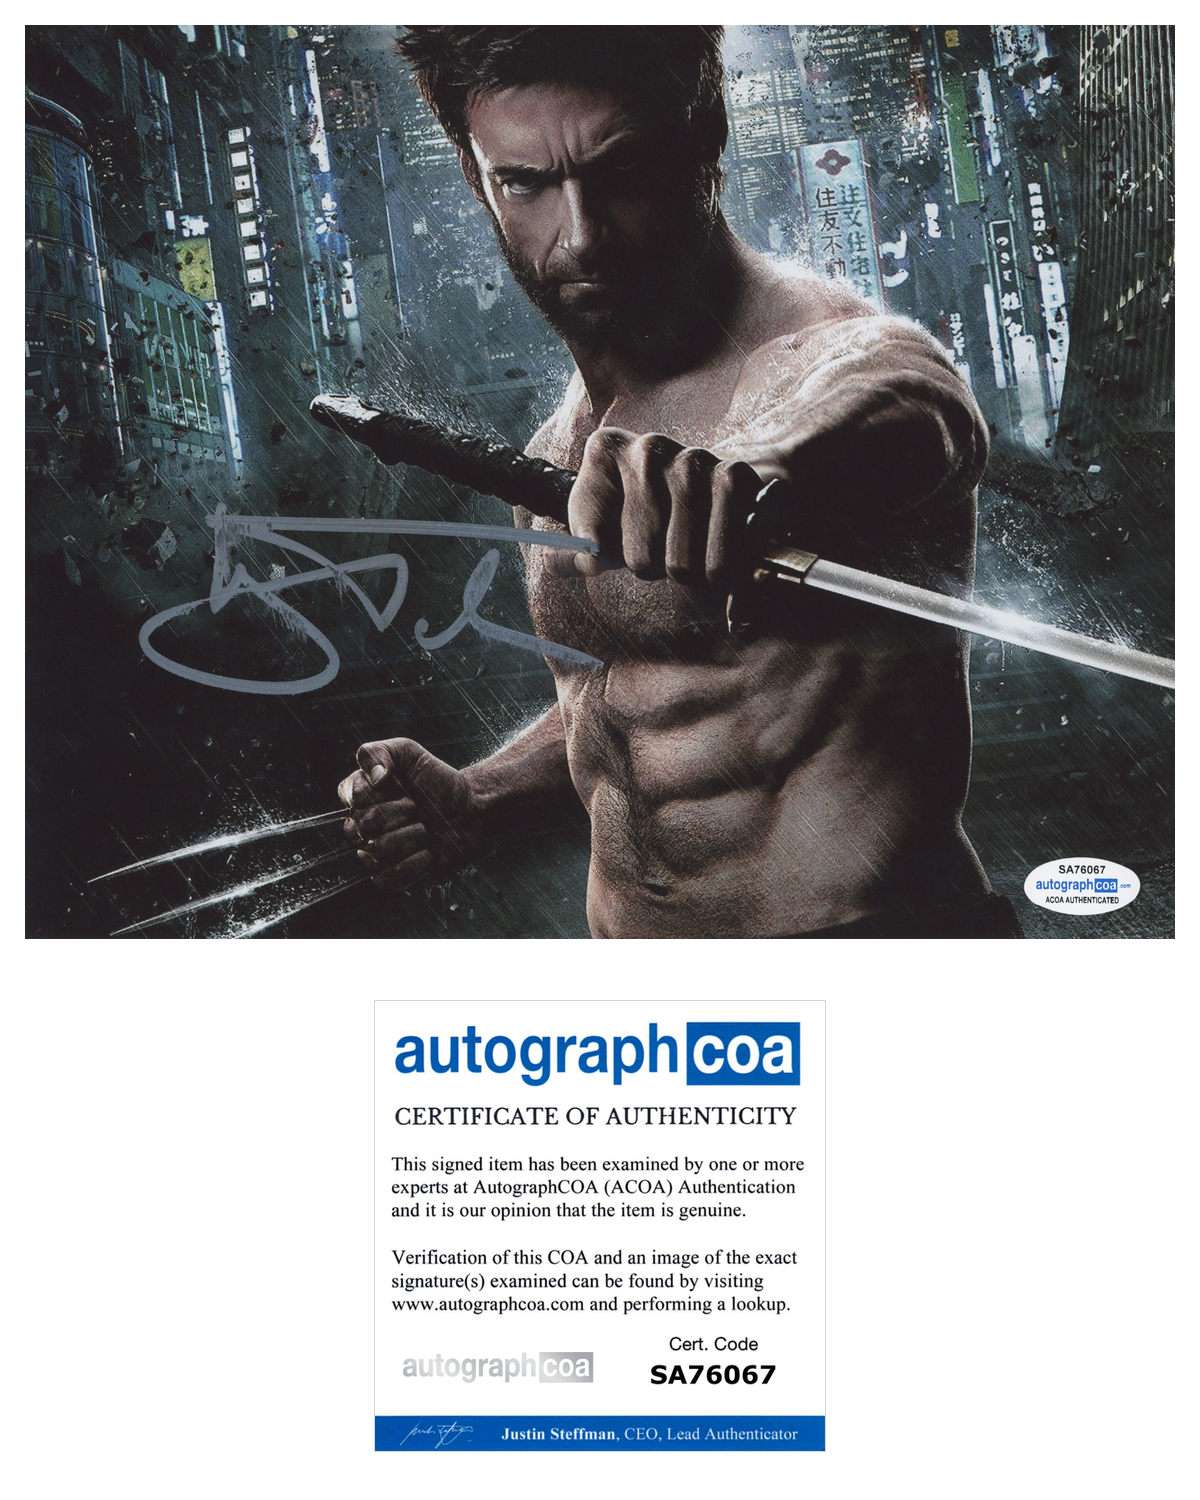 Hugh Jackman Signed Autographed 8x10 Photo Poster painting X-MEN The Wolverine Logan ACOA COA